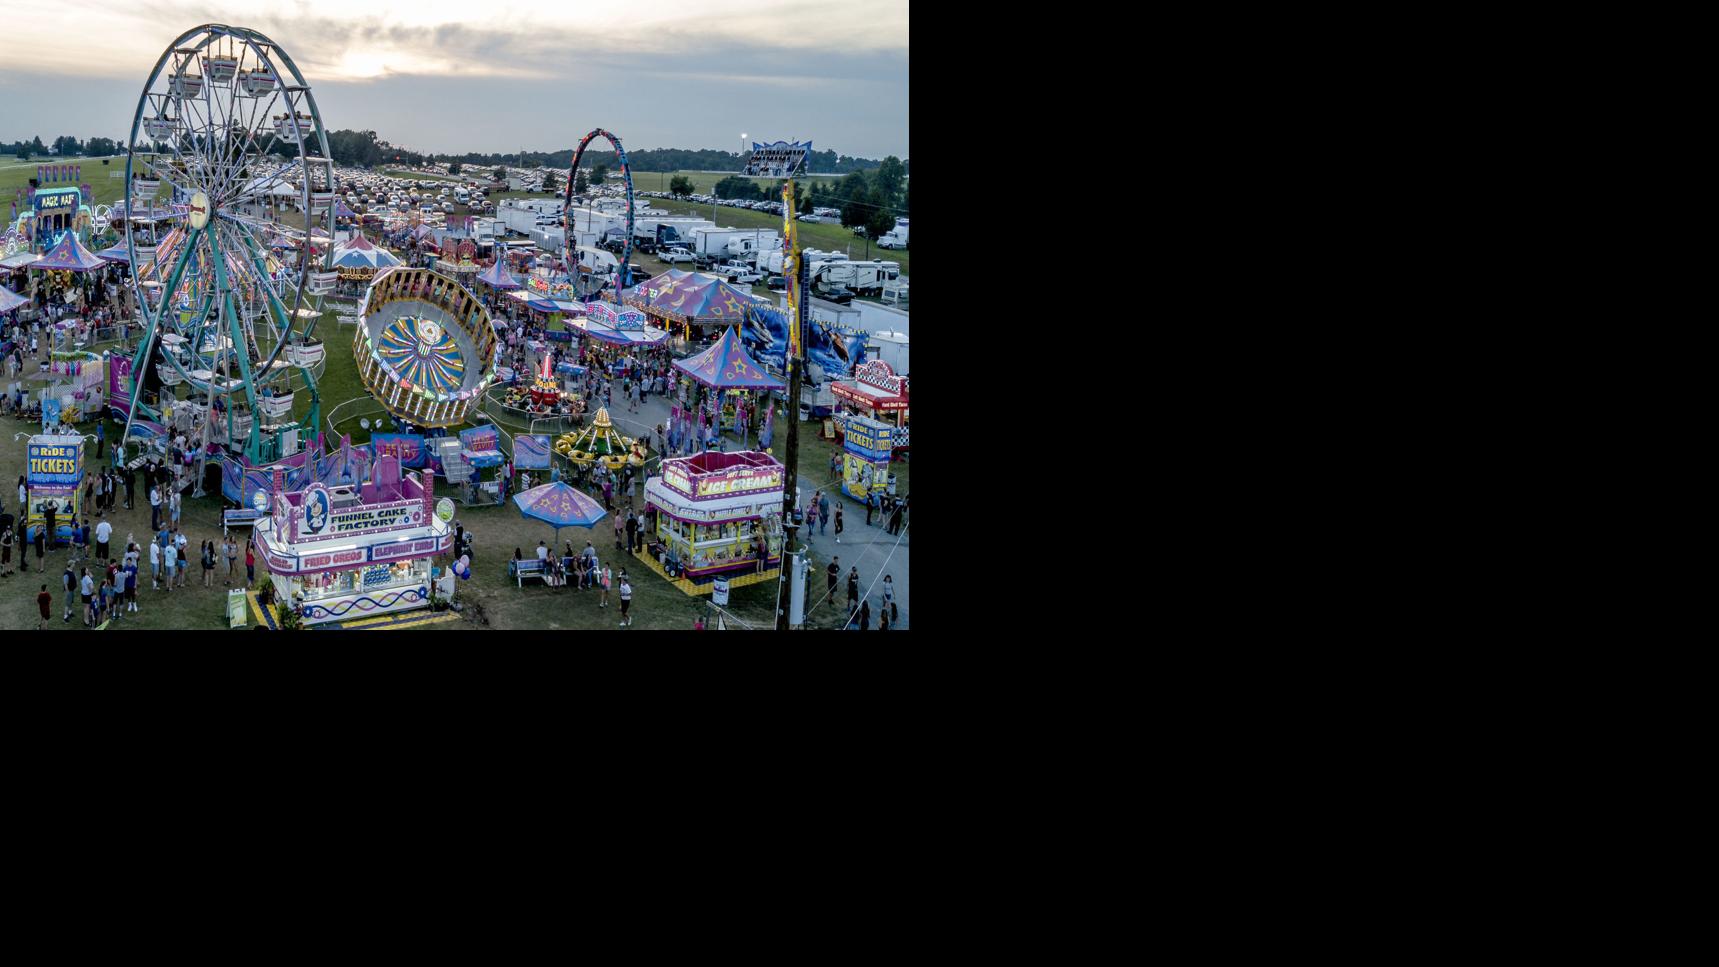 Cecil County Fair gets underway tonight Cecil County Fair